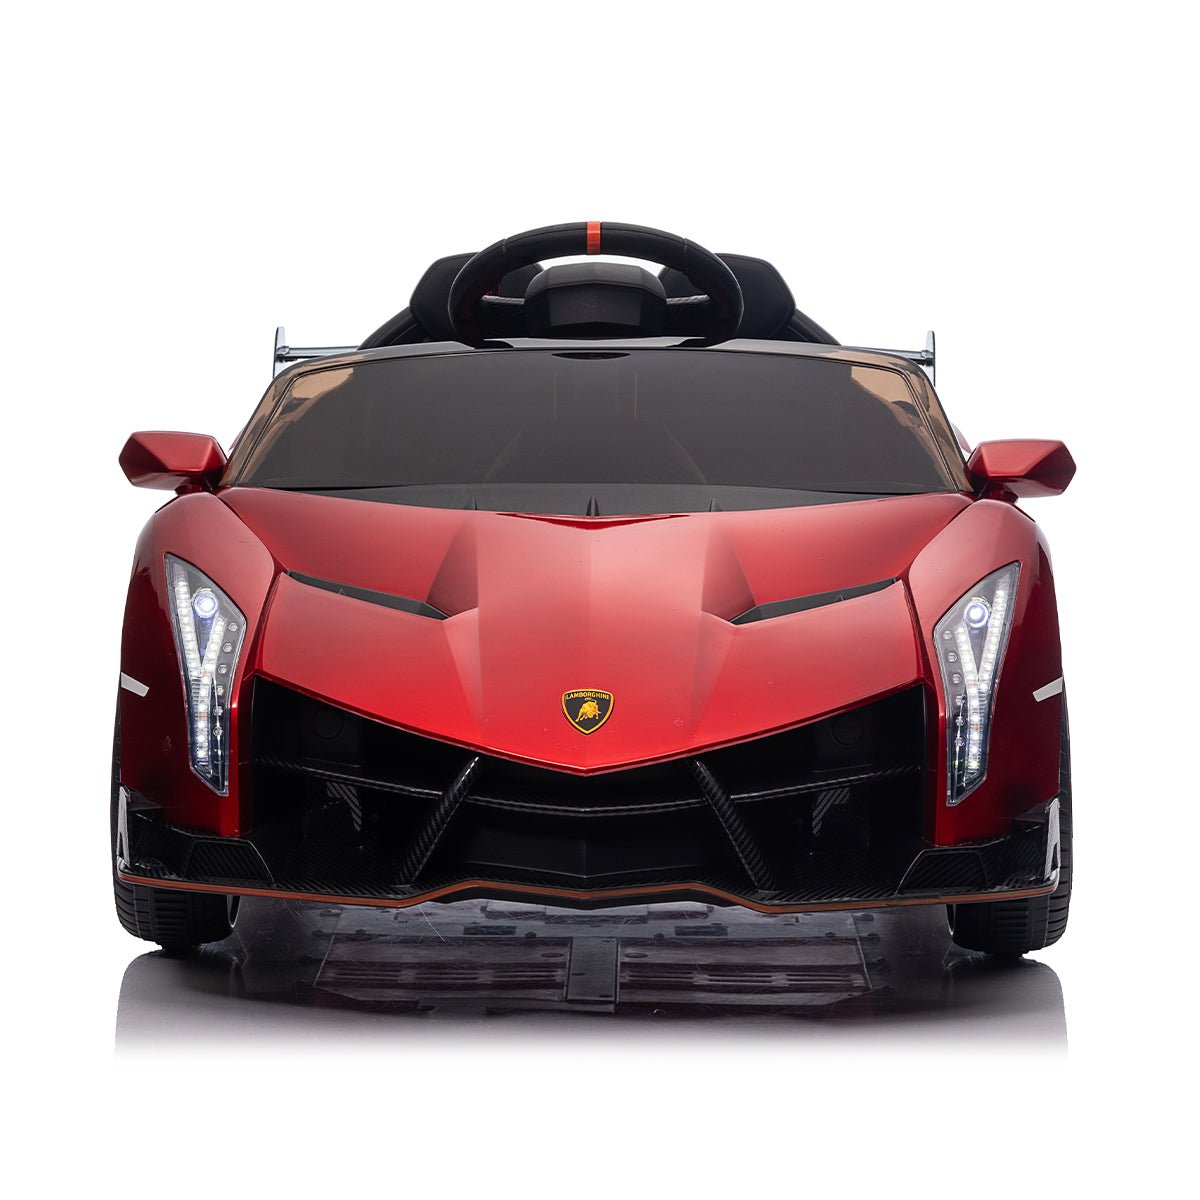 Lamborghini Veneno 24V Electric 4WD Ride On Car